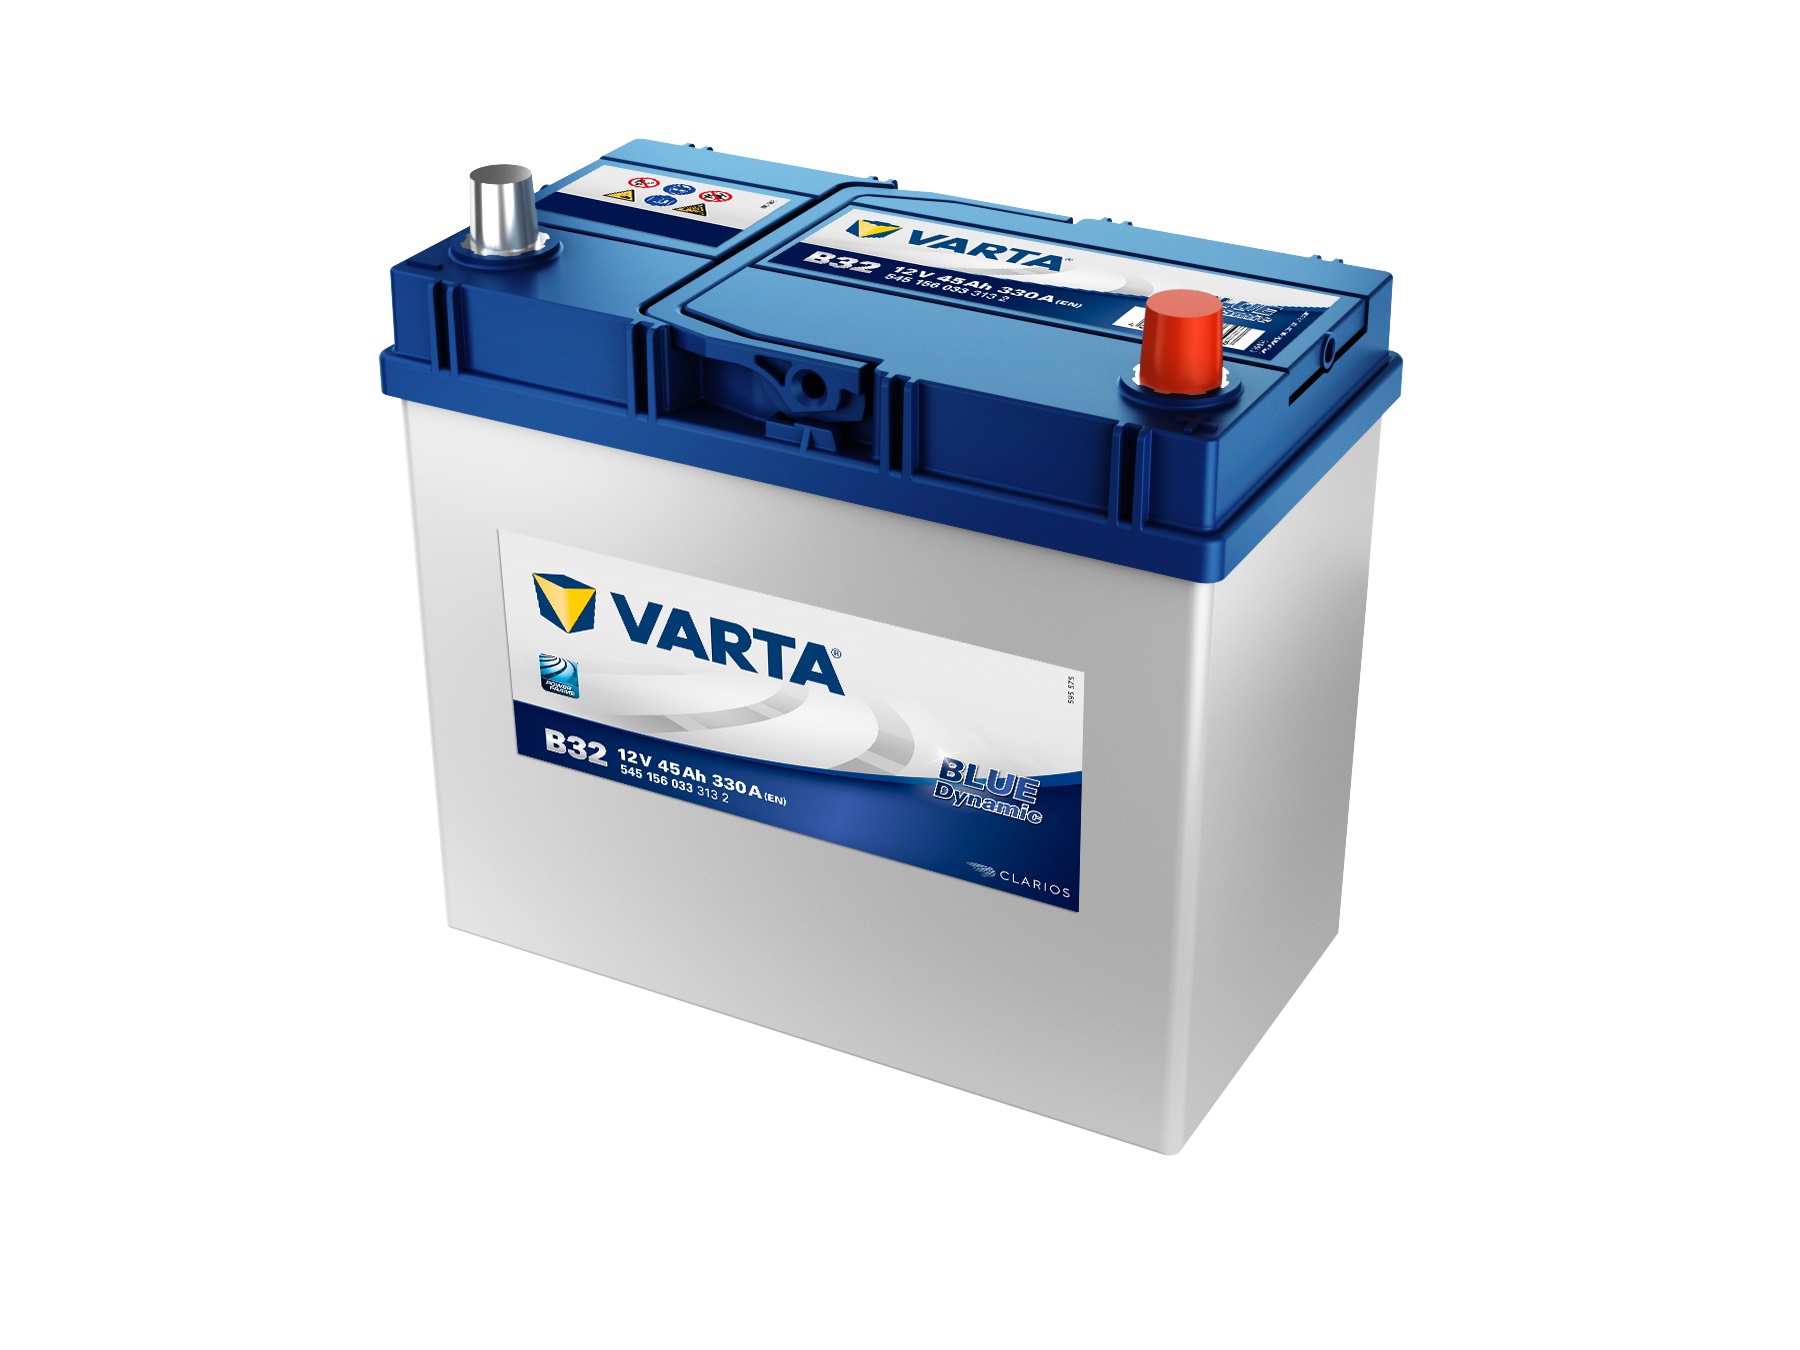 VARTA Blue Dynamic Autobatterie, B32, 5451560333, 45 Ah, 330 A von Varta